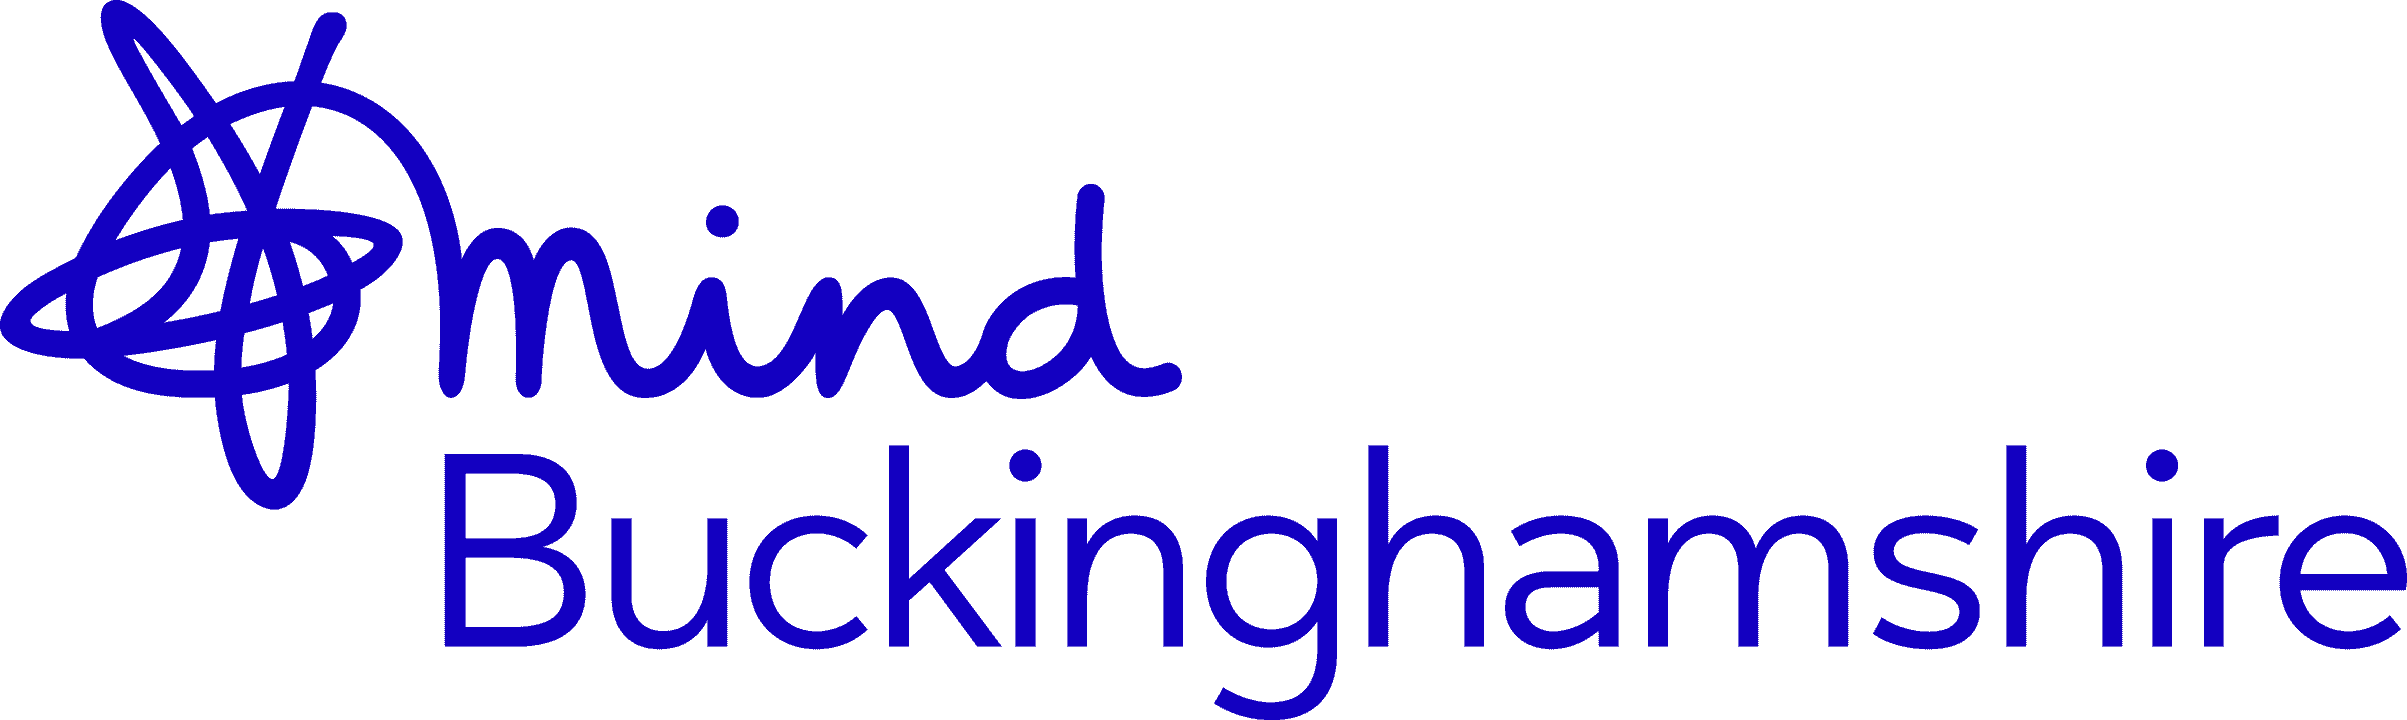 https://ef7reu2nmnd.exactdn.com/wp-content/uploads/2021/09/Buckinghamshire_Mind_Logo_stacked_RGB.png?strip=all&lossy=0&w=1400&ssl=1